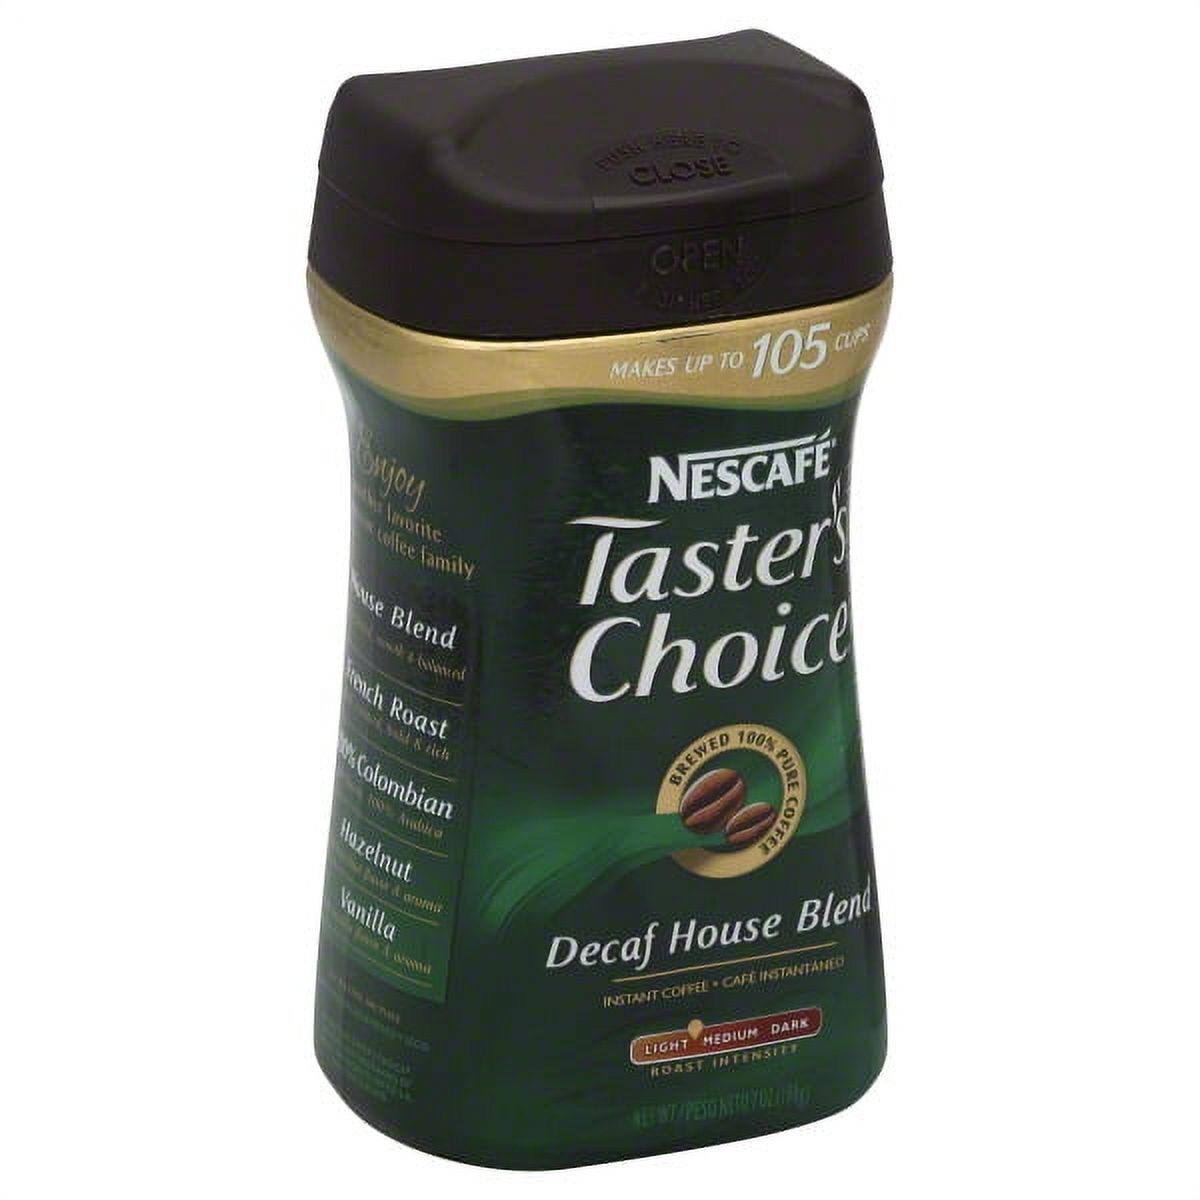 Nescafé Taster's Choice Decaf House Blend, Medium Roast, Instant Coffee, 7 oz - image 1 of 5